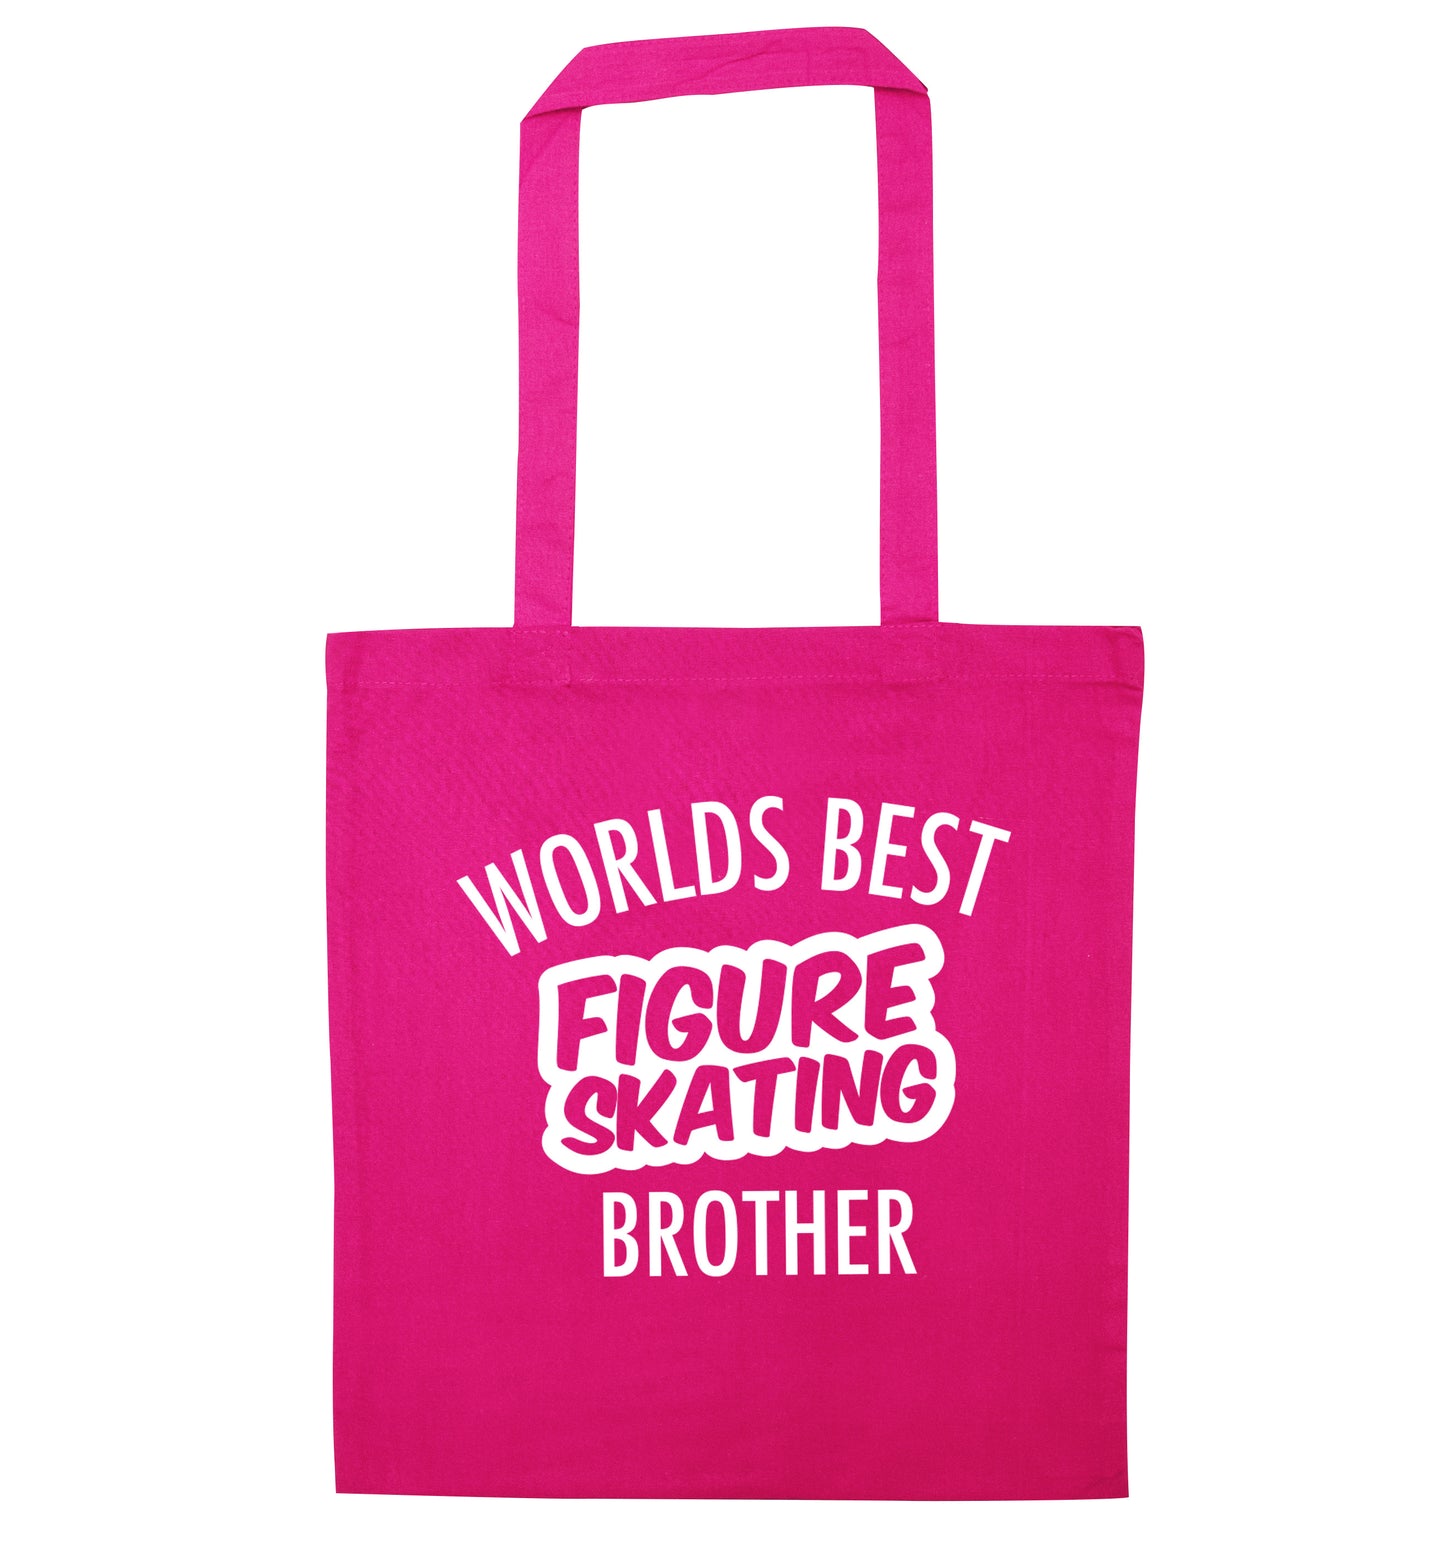 Worlds best figure skating brother pink tote bag